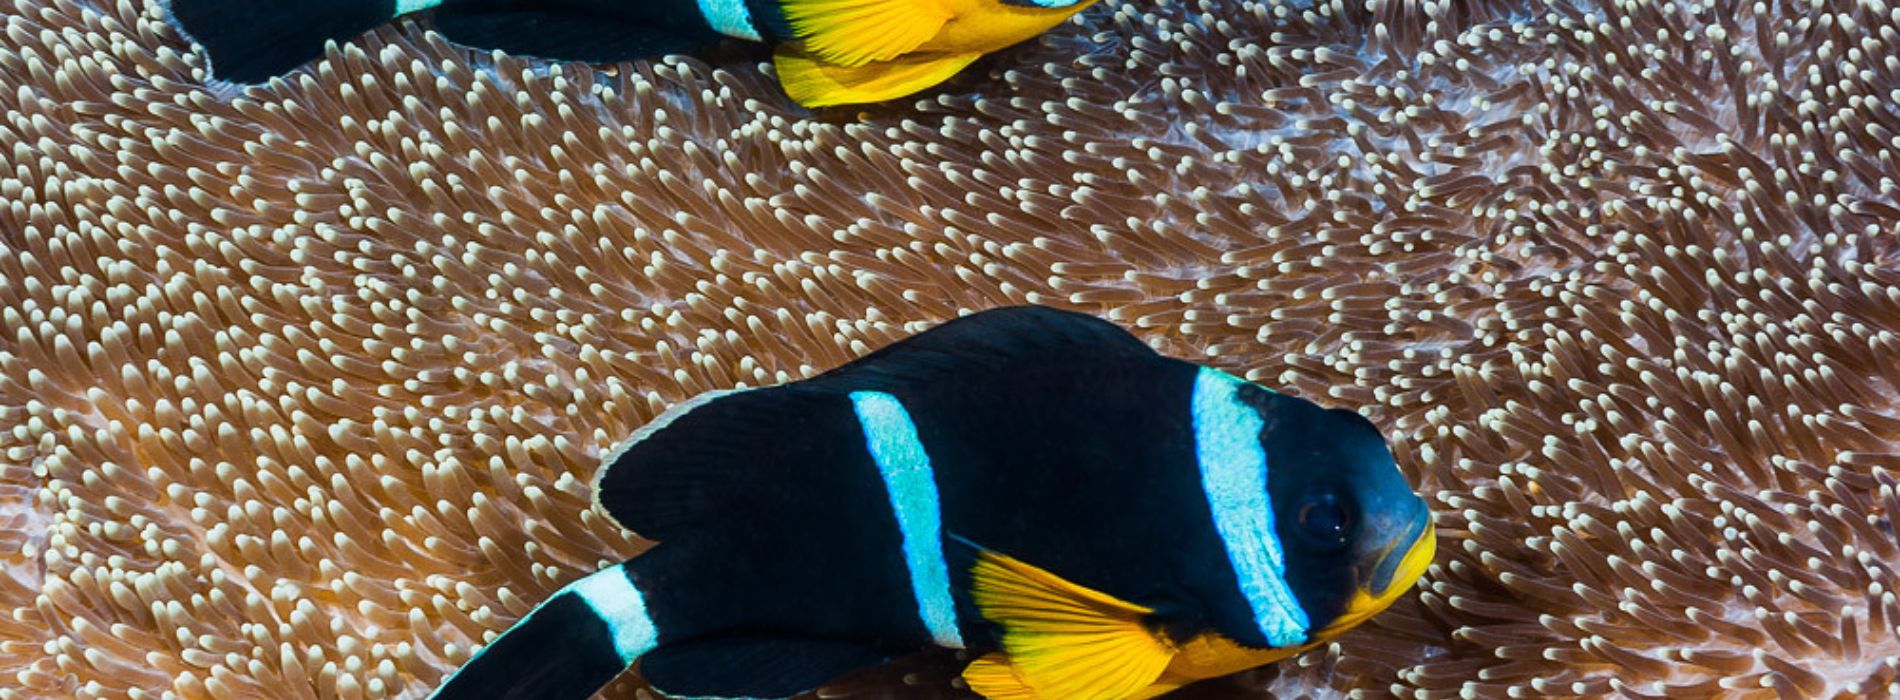 Mauritian-anemonefish-female-and-male-swimming